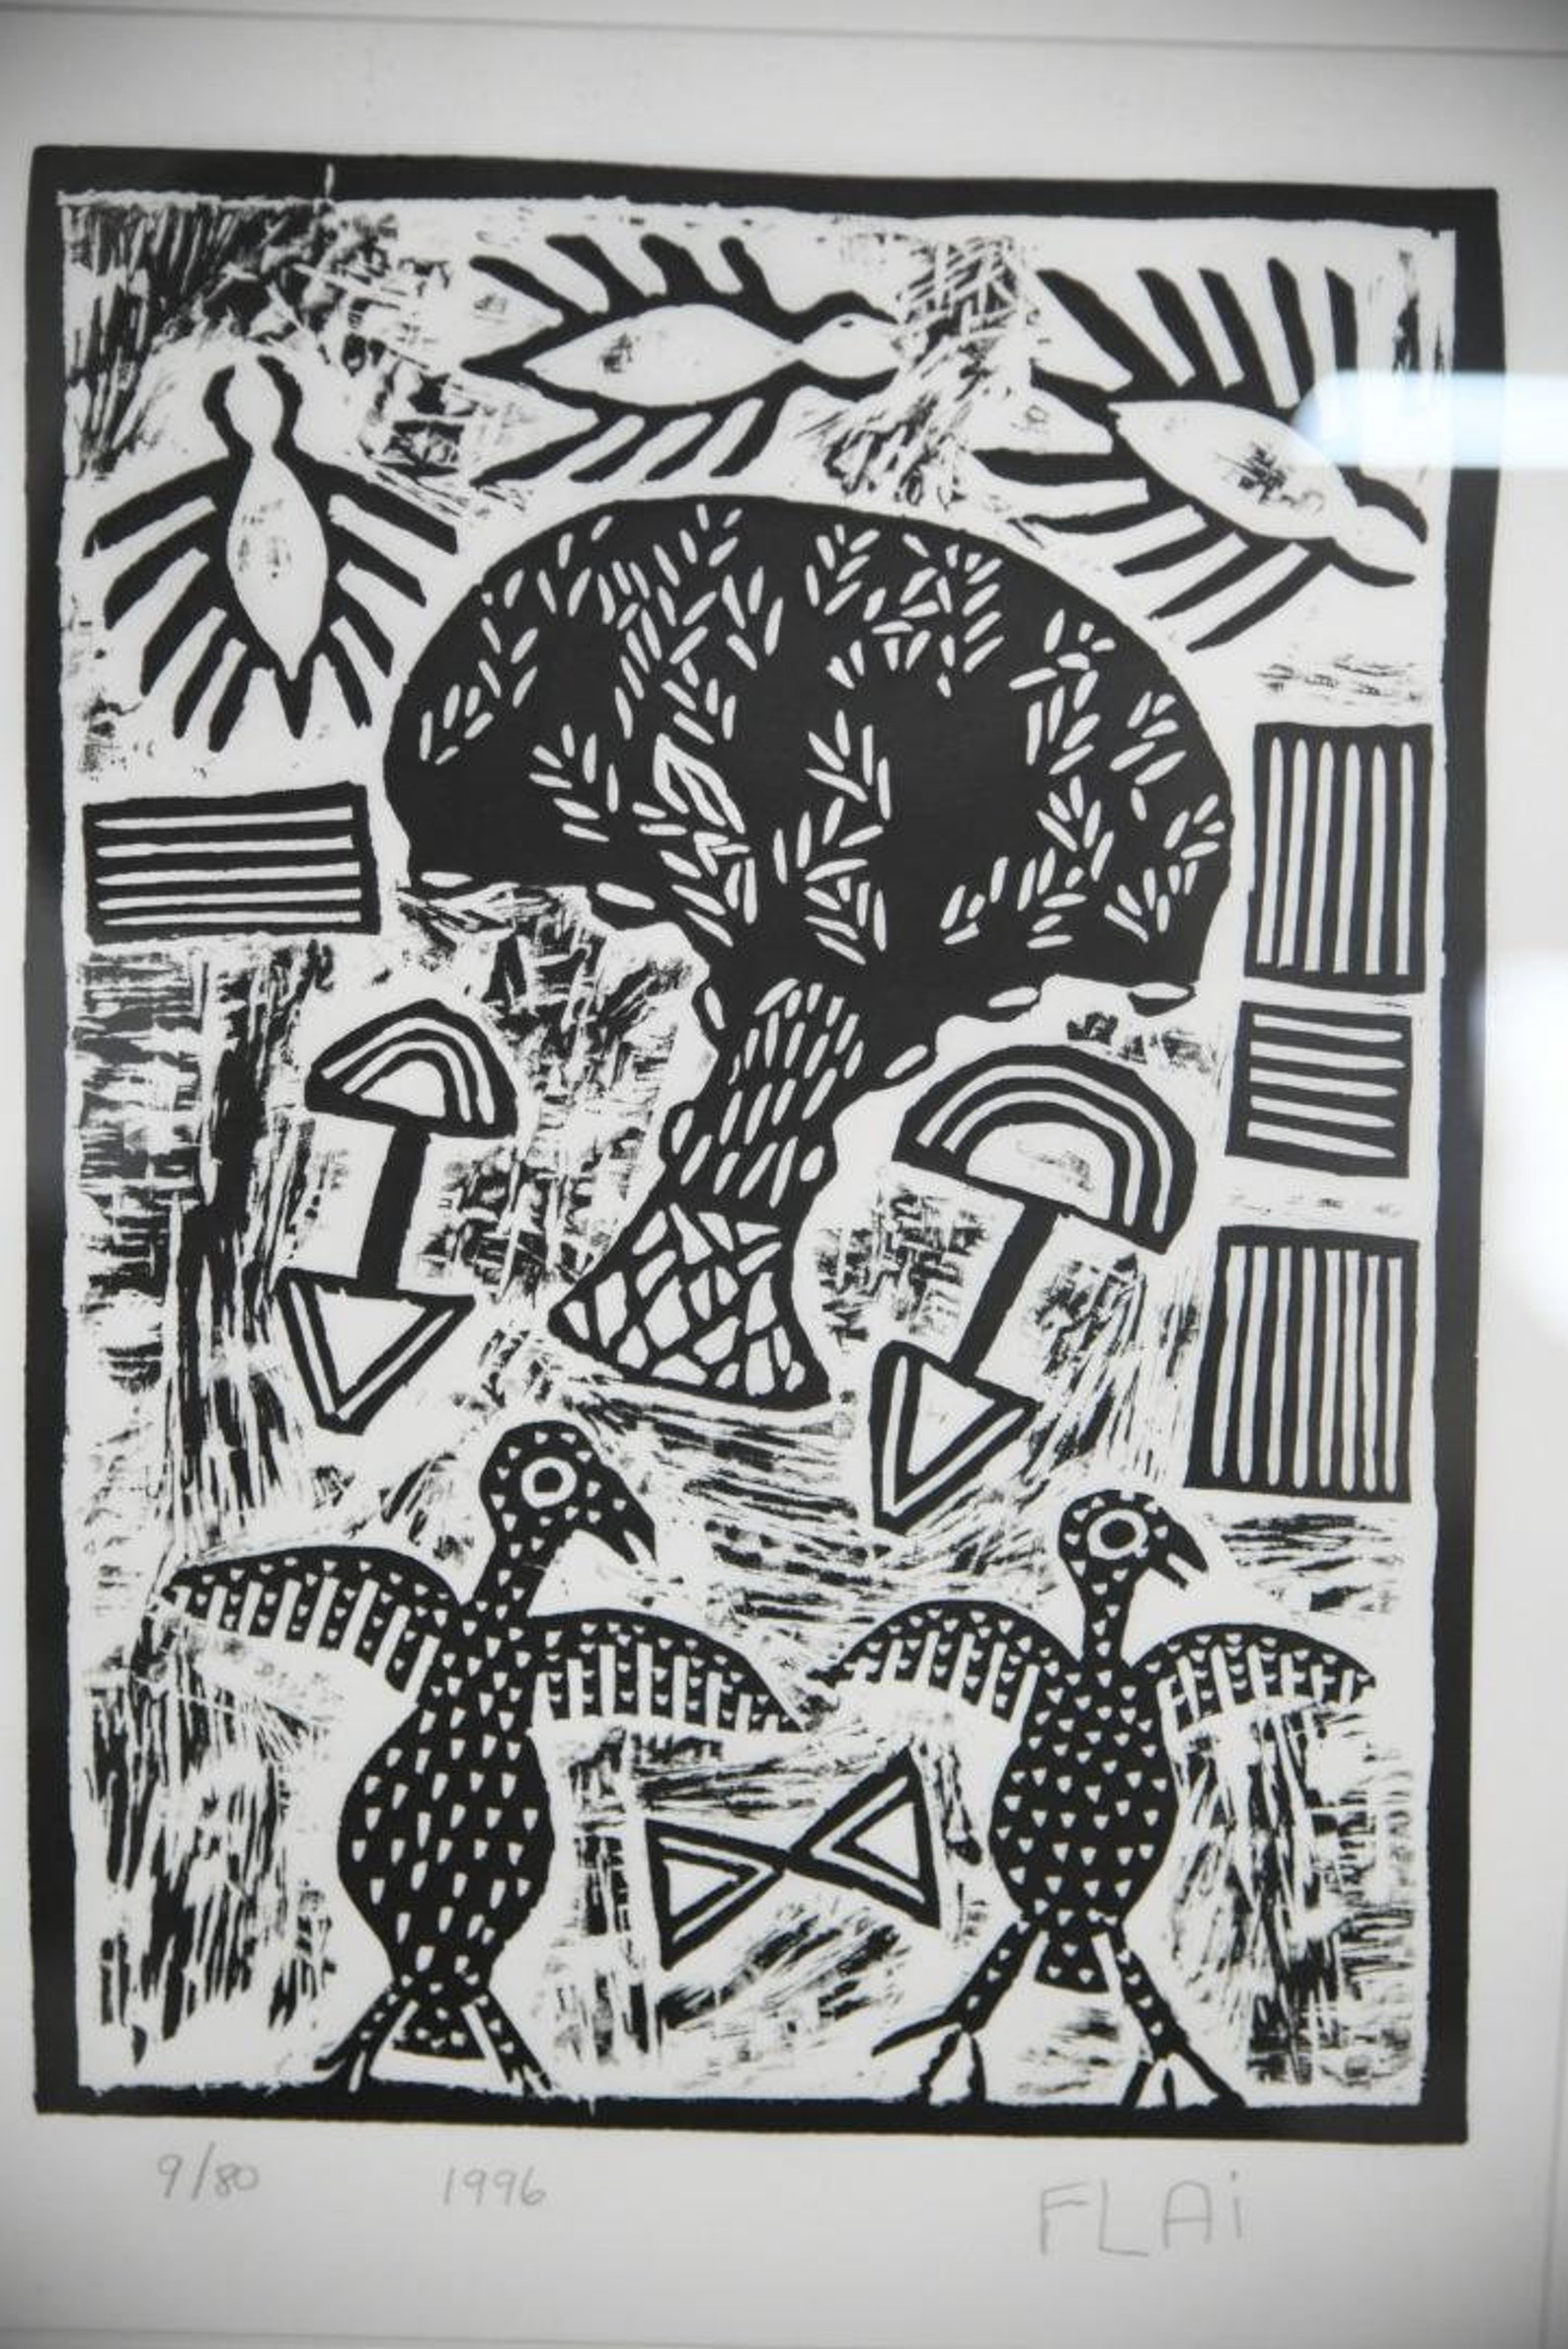 African Lino Cut Print Flai | Etsy